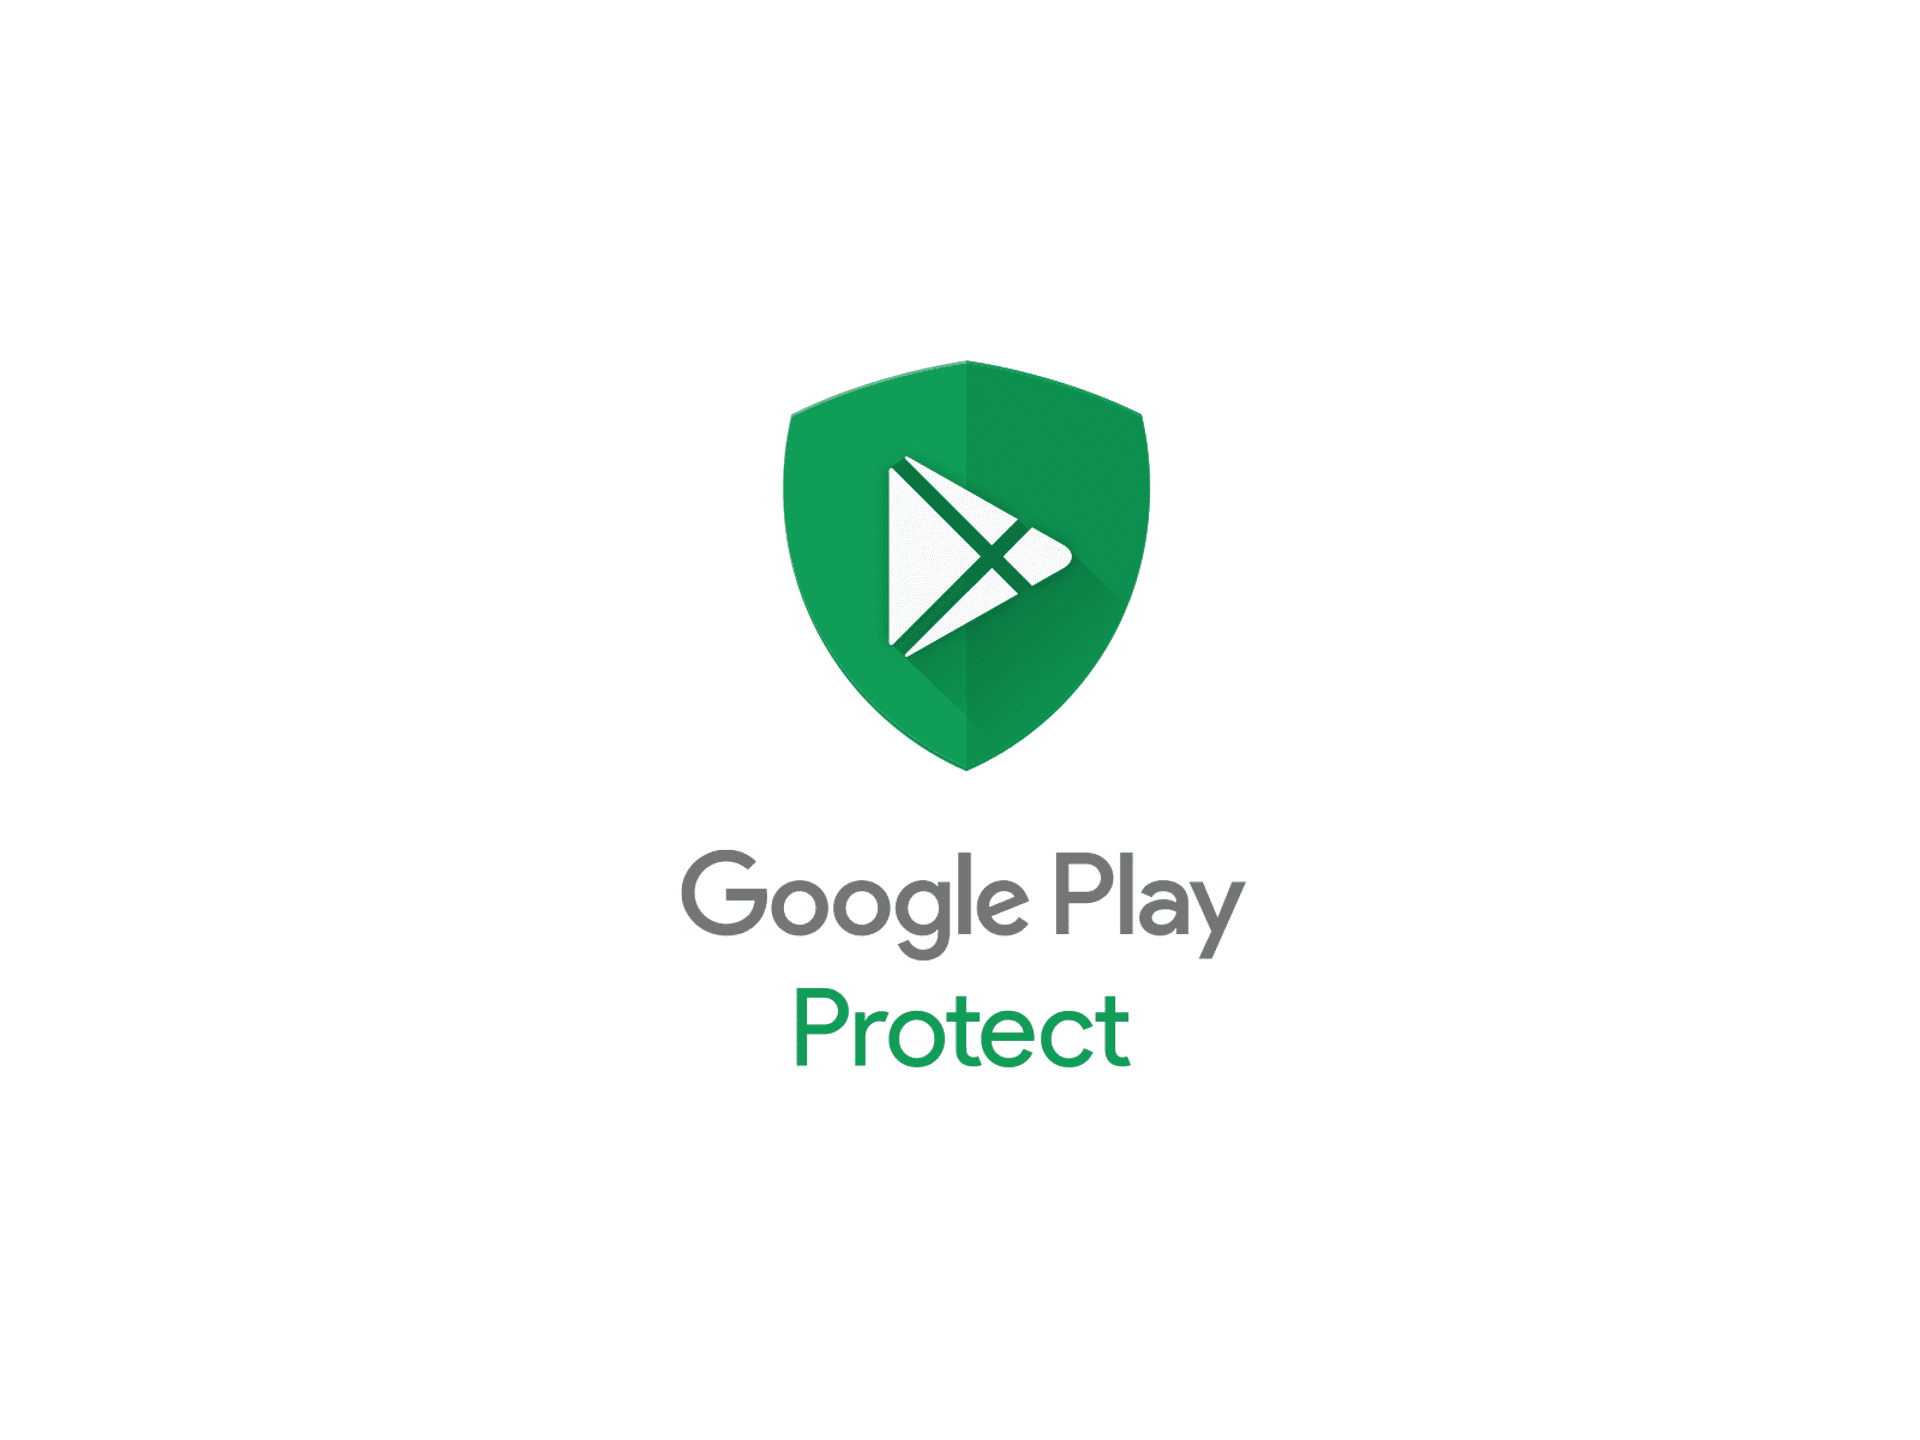 Google Play Protect tag cop